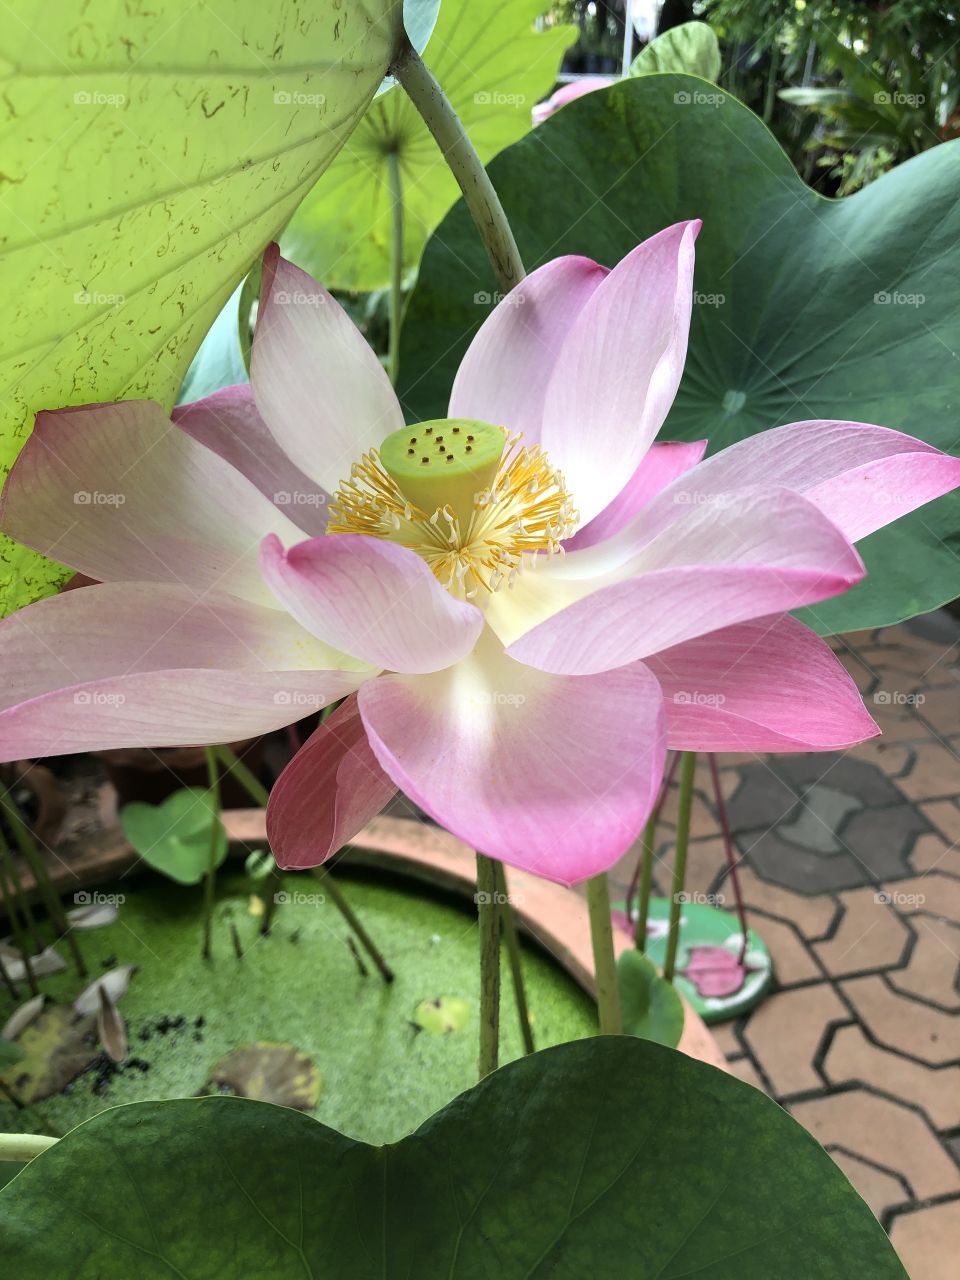 The lotus in my garden bloom again.